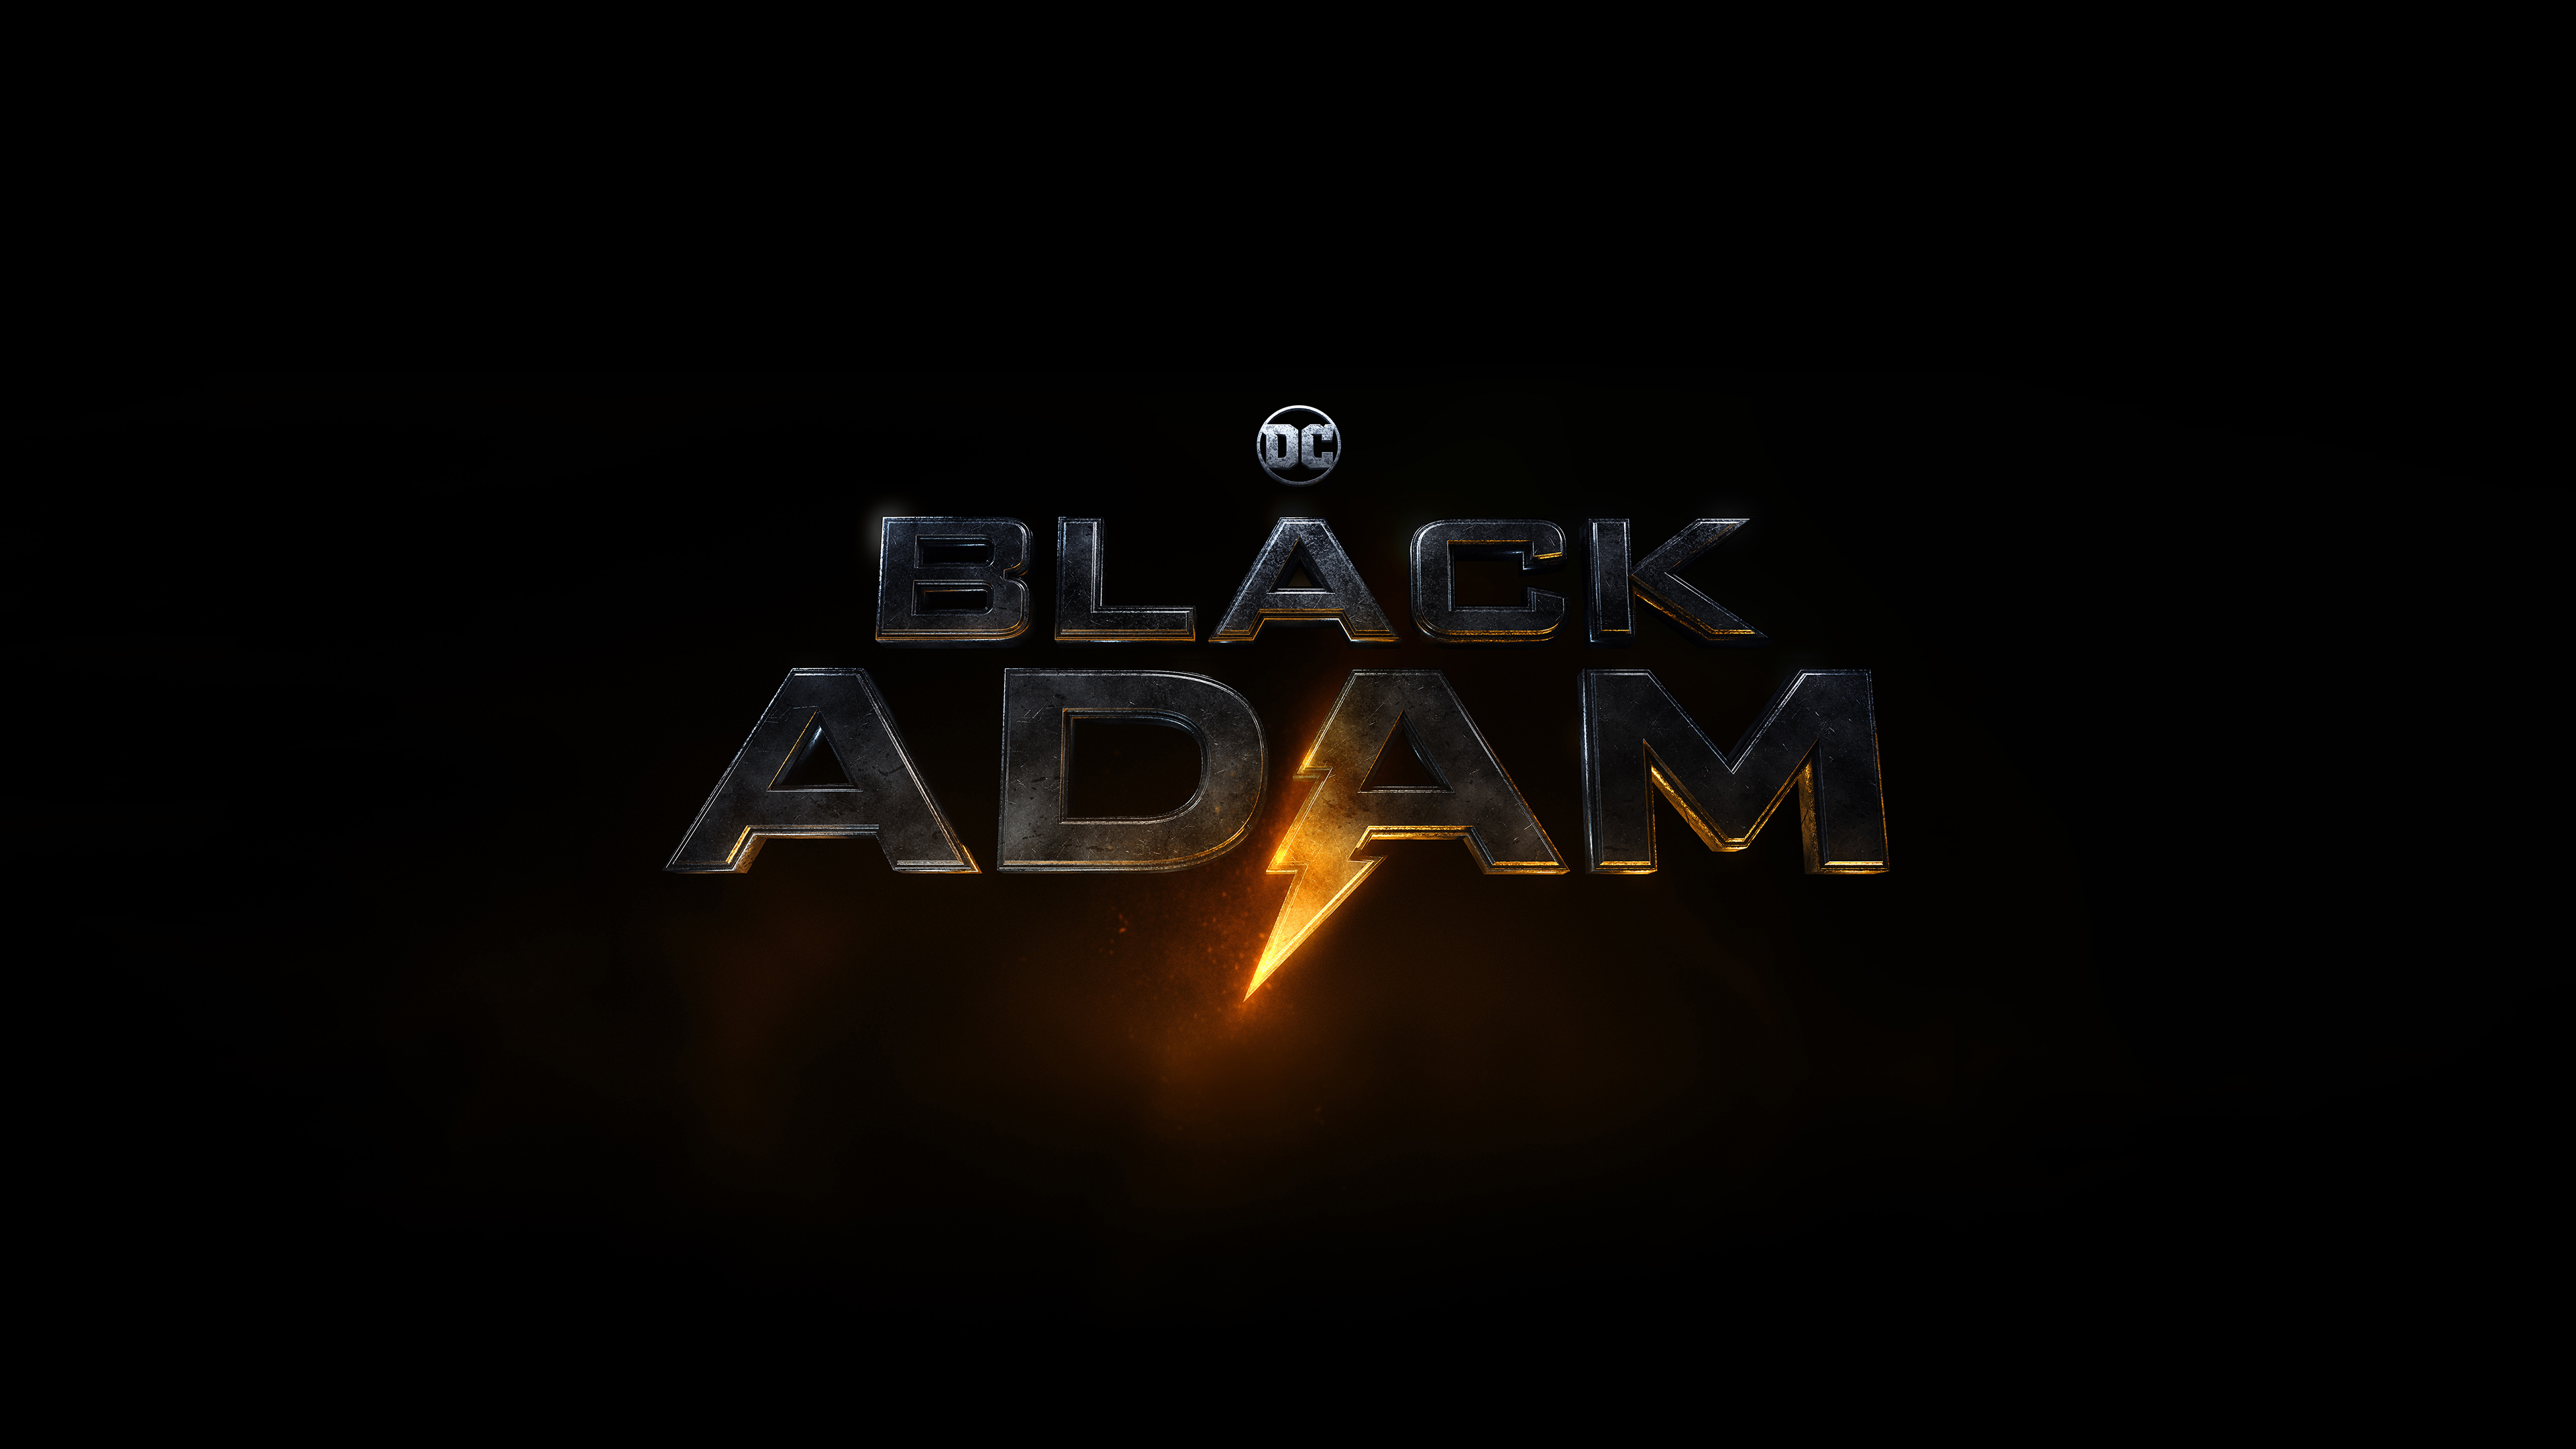 Black Adam 4K Art 2021 Wallpapers